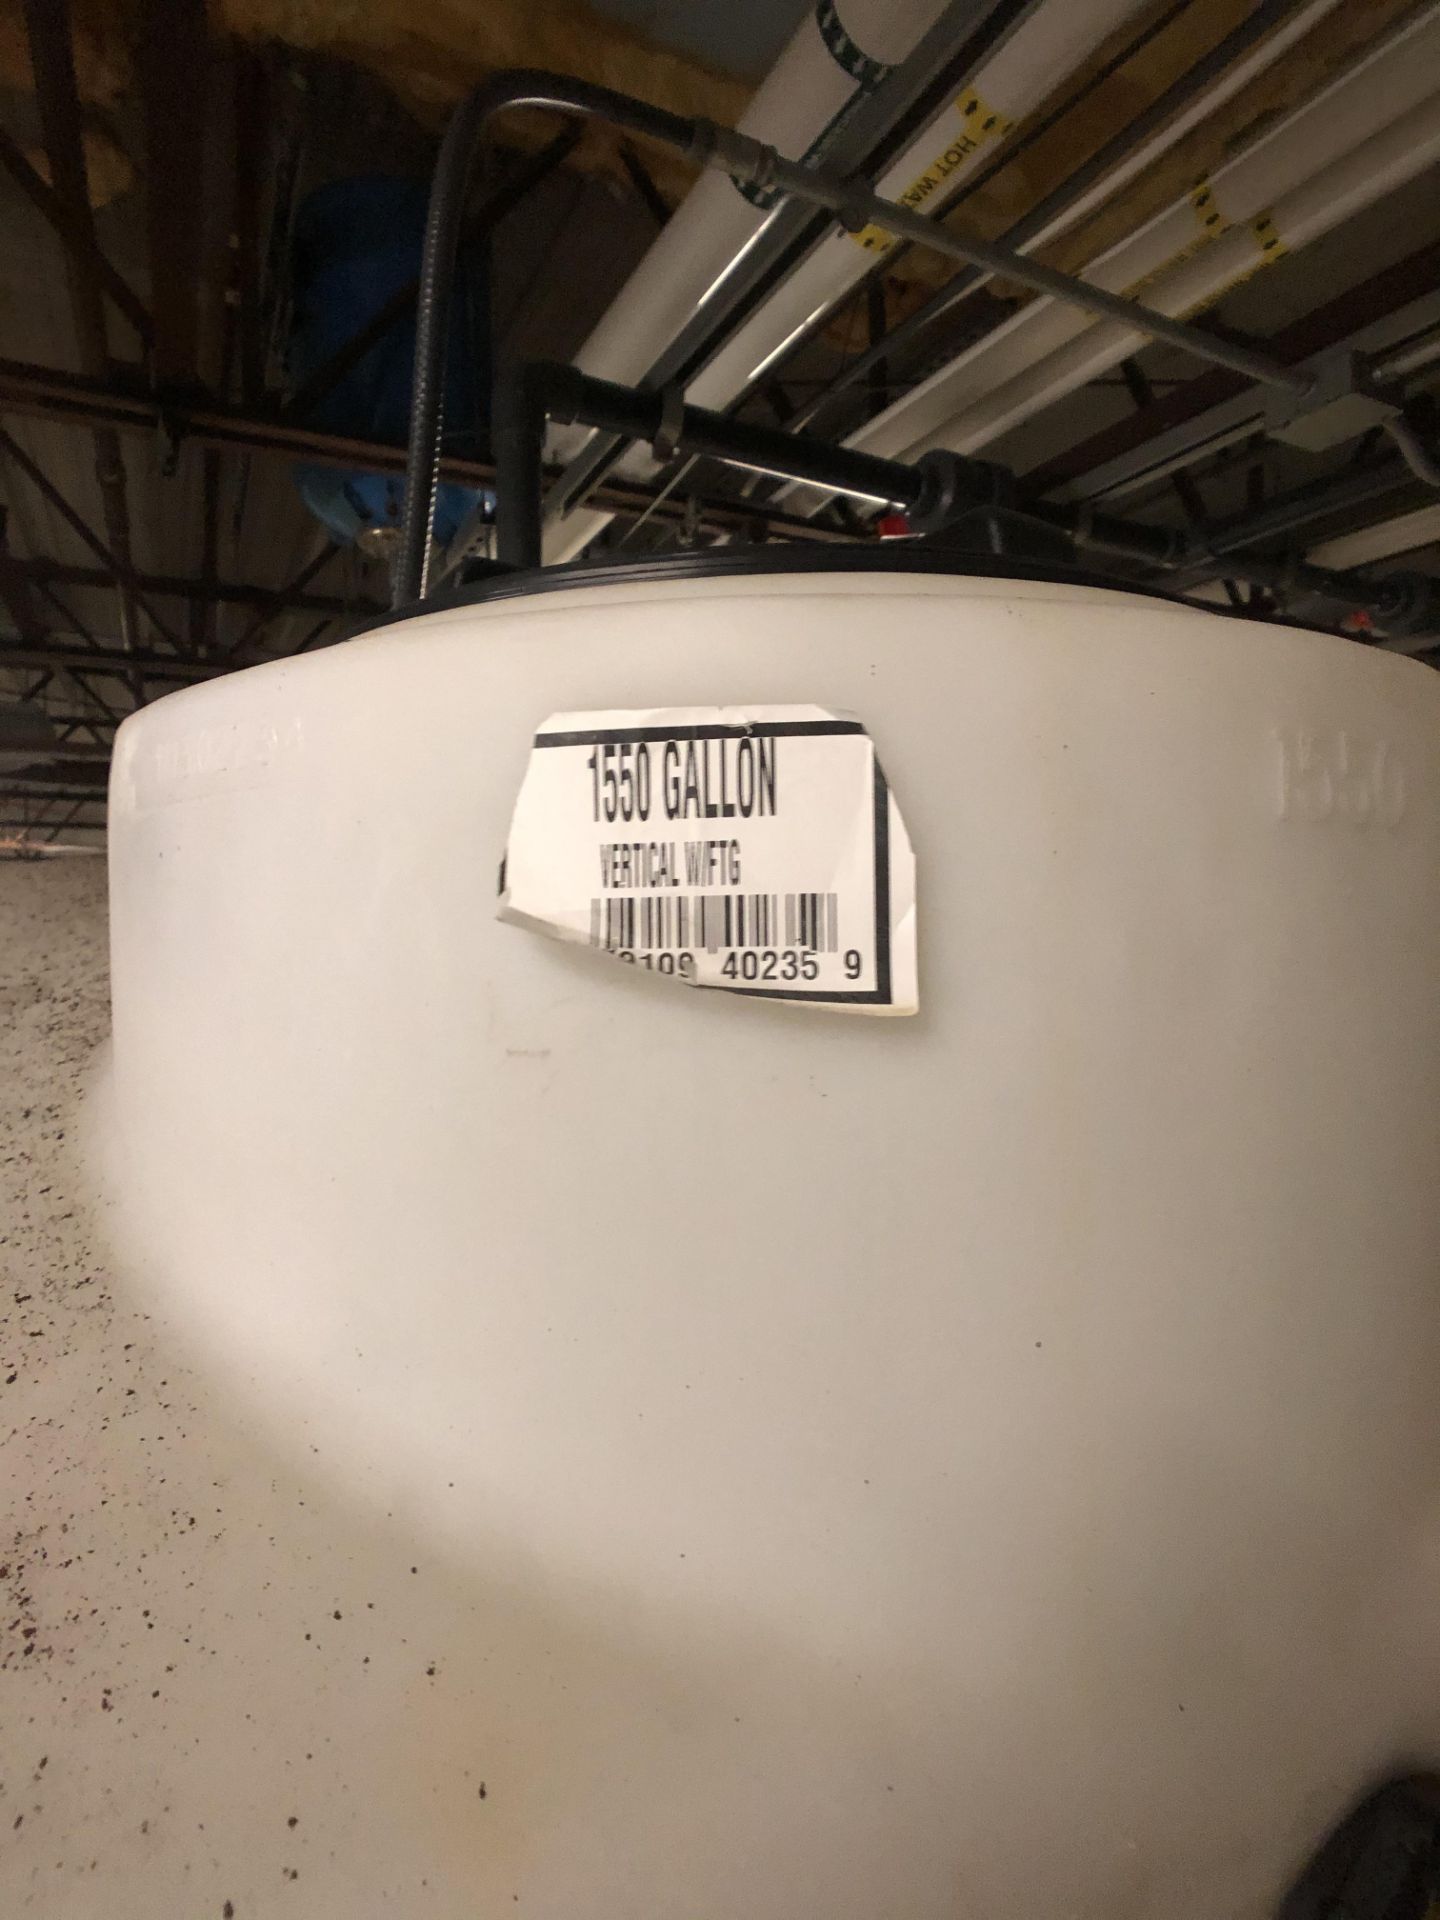 1,550 Gallon Fiberglass Tank (SOLD SUBJECT TO BULK BID IN LOT 152 A) - Image 4 of 5